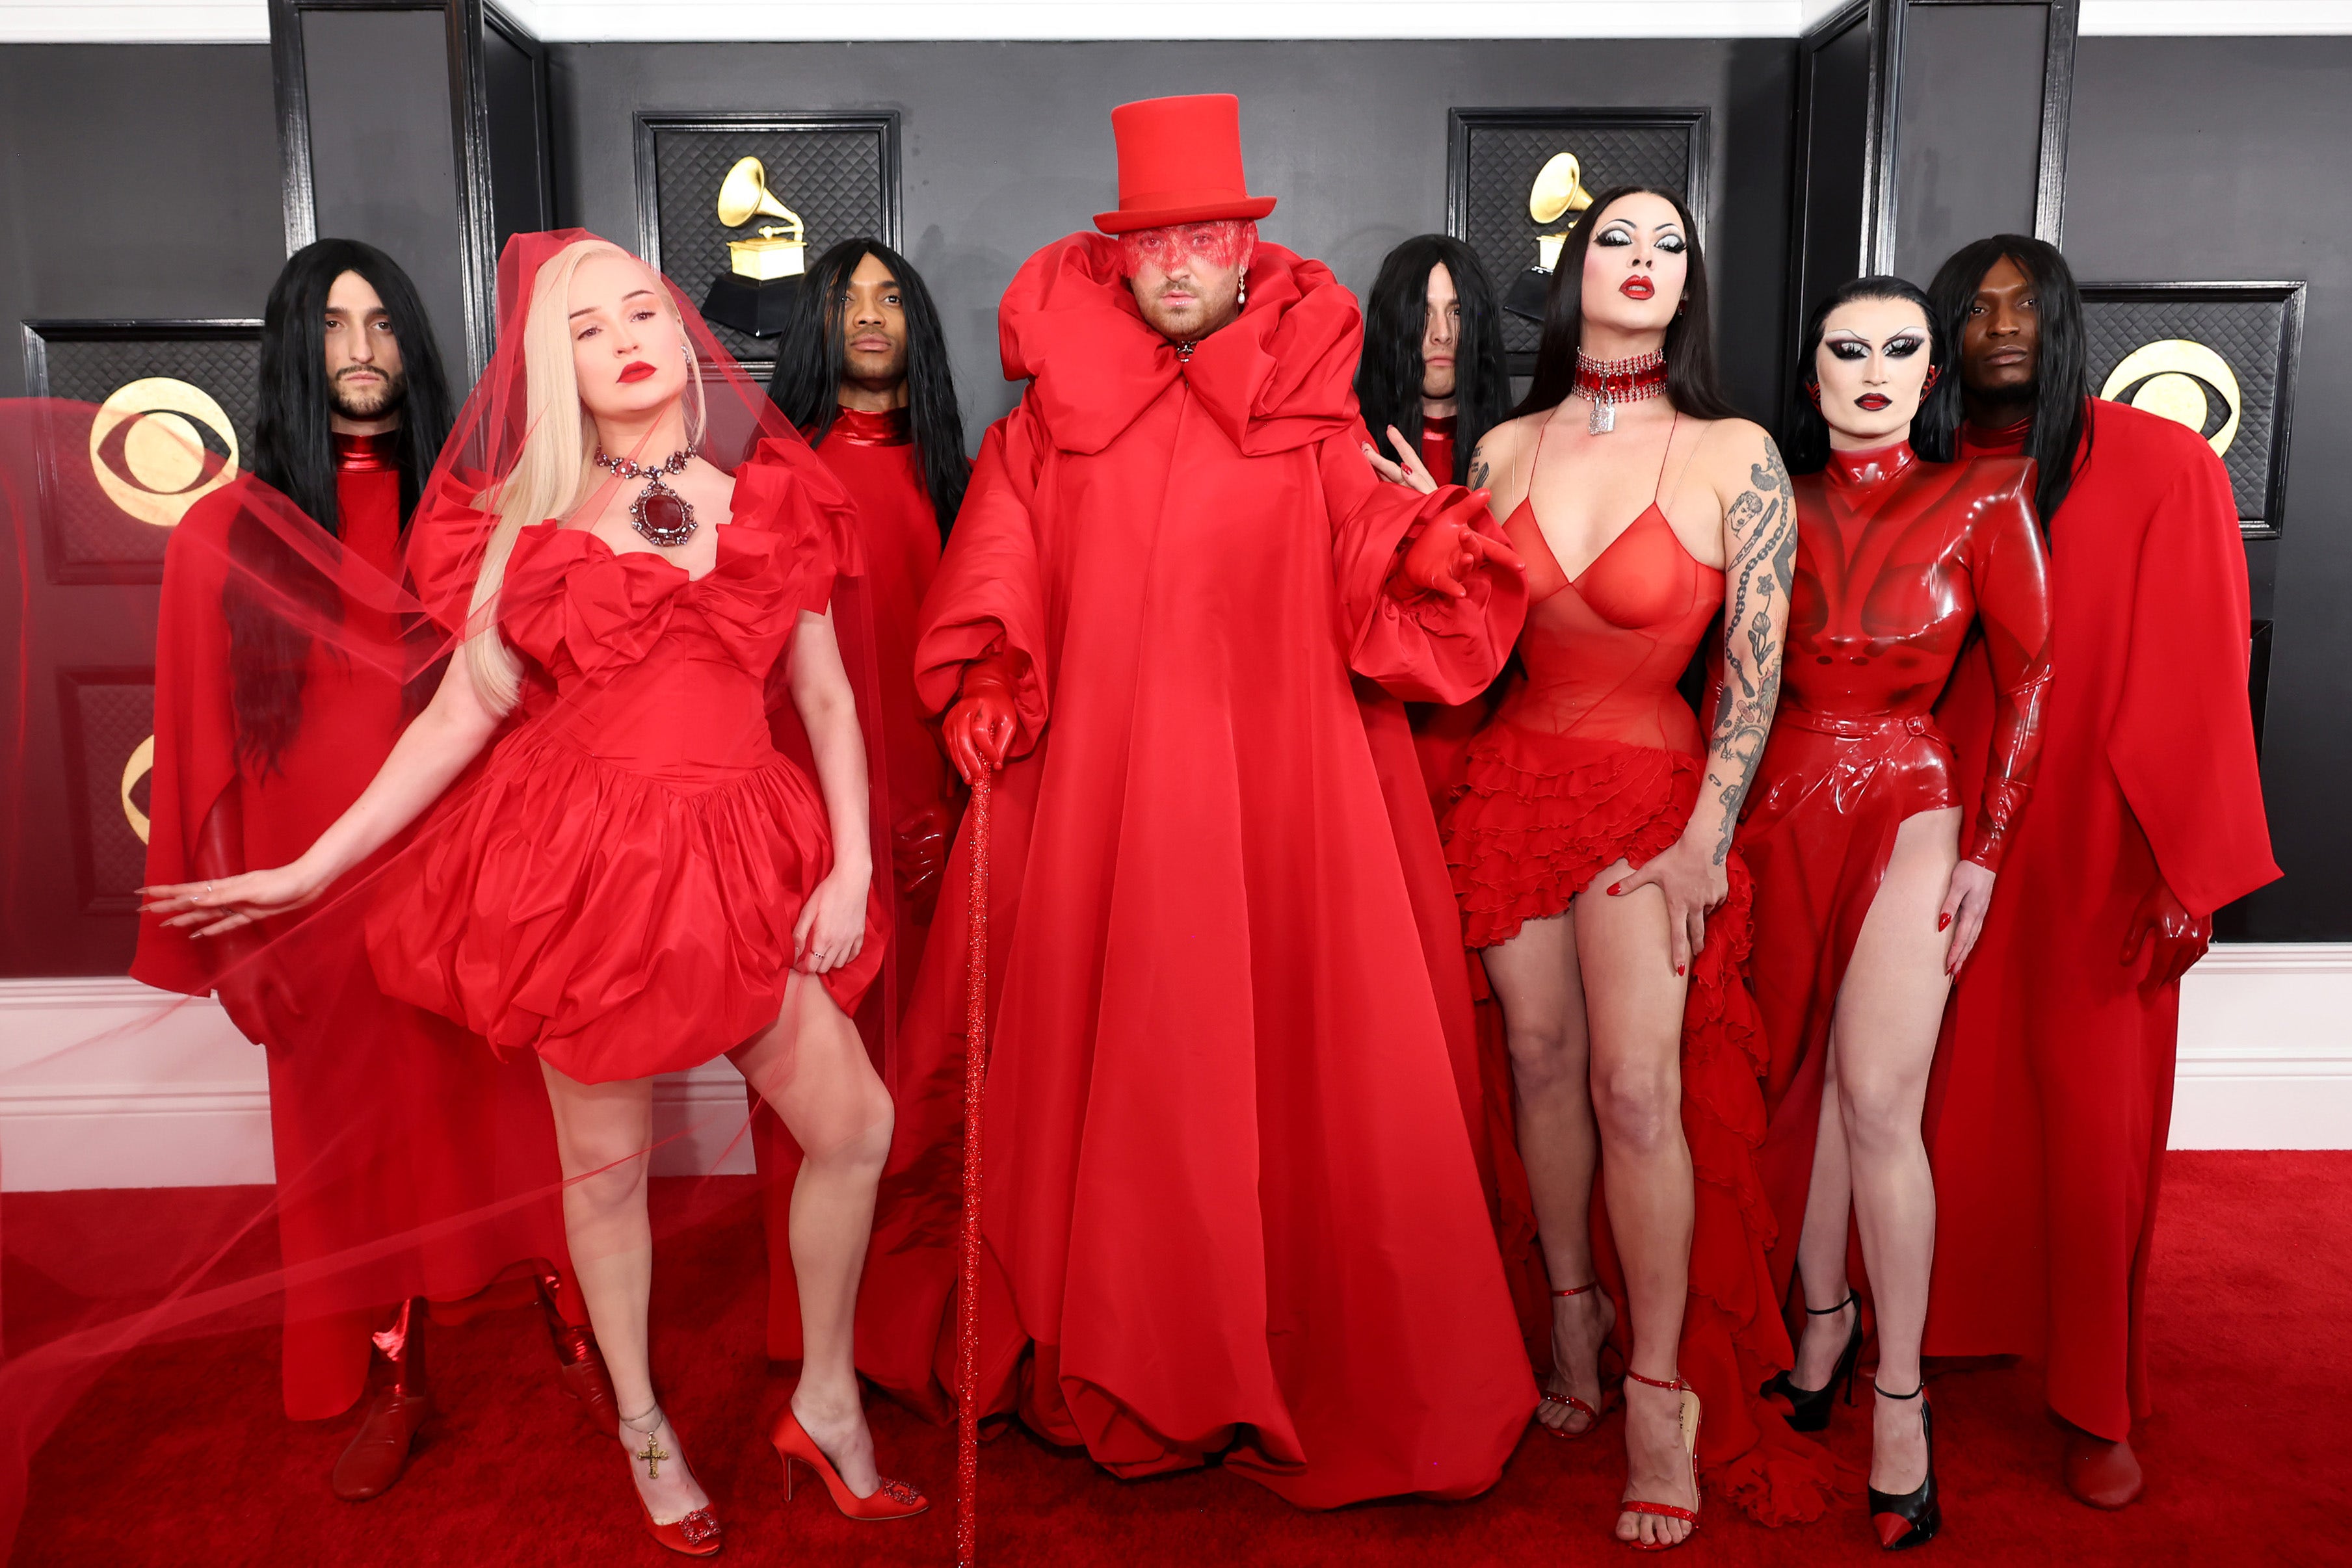 Ted Cruz blasts shocking Satanthemed performance at Grammys 'This is